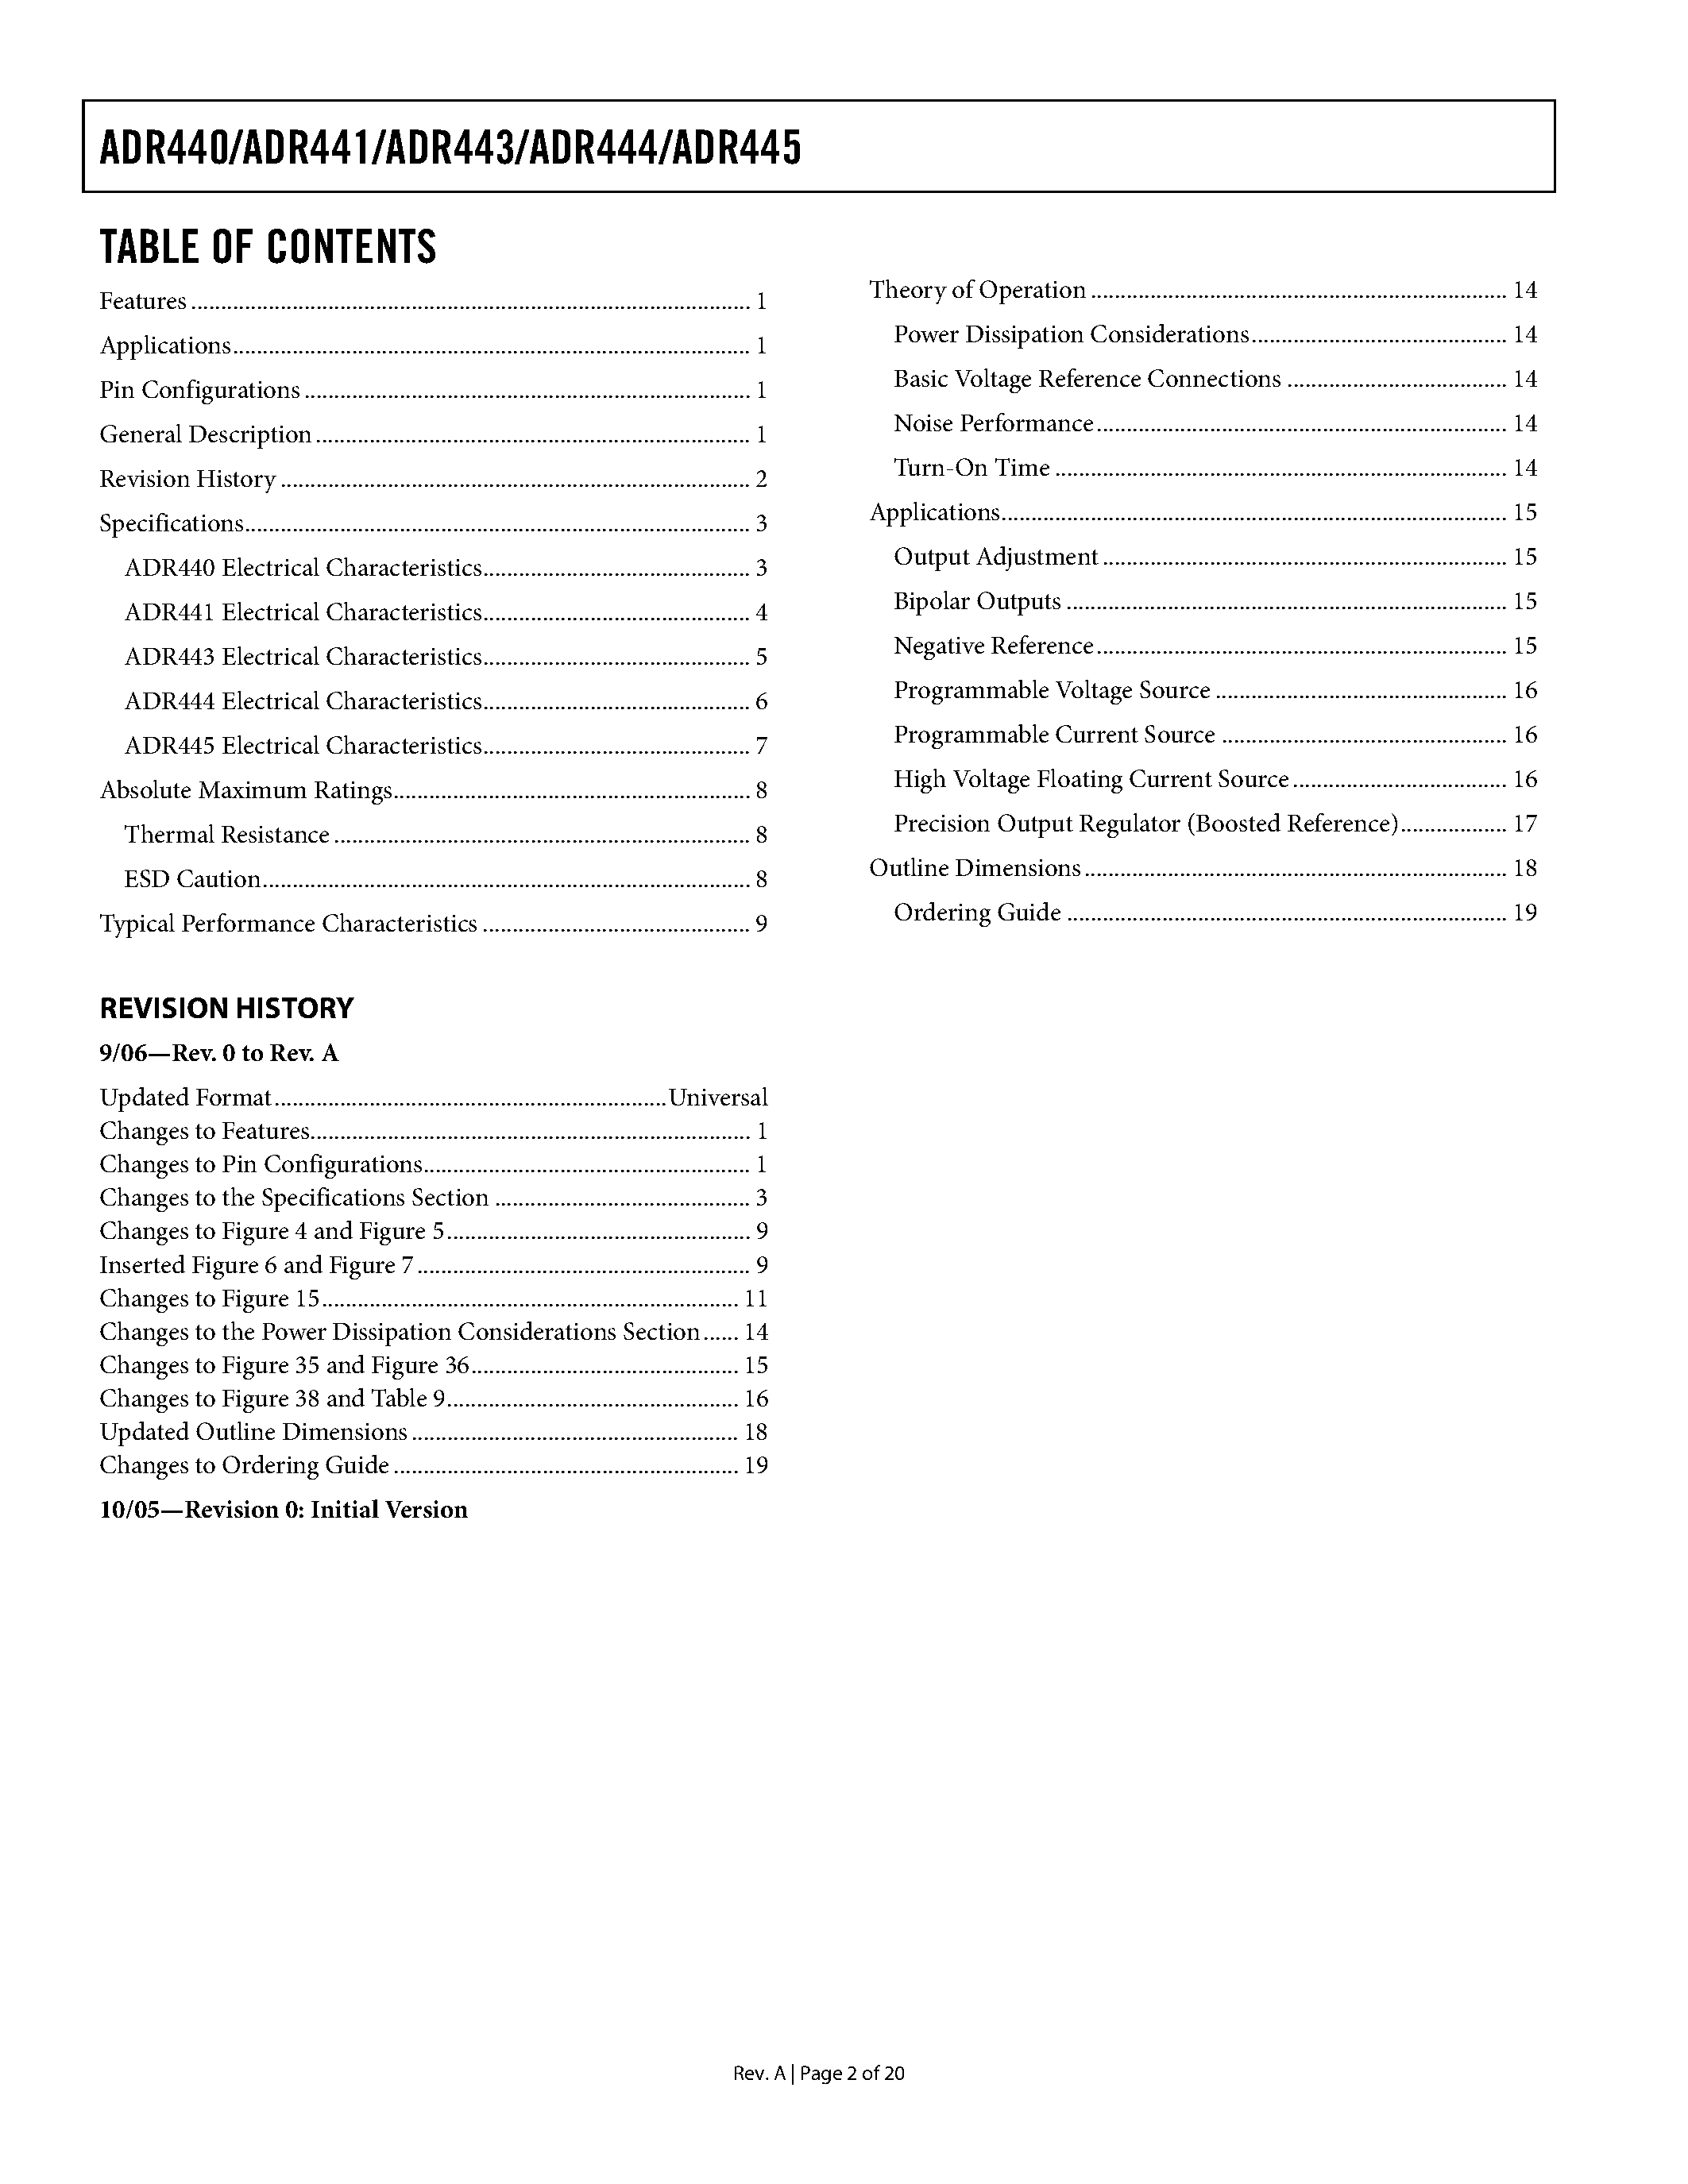 Datasheet ADR440 - (ADR440 - ADR445) LDO XFET Voltage References page 2